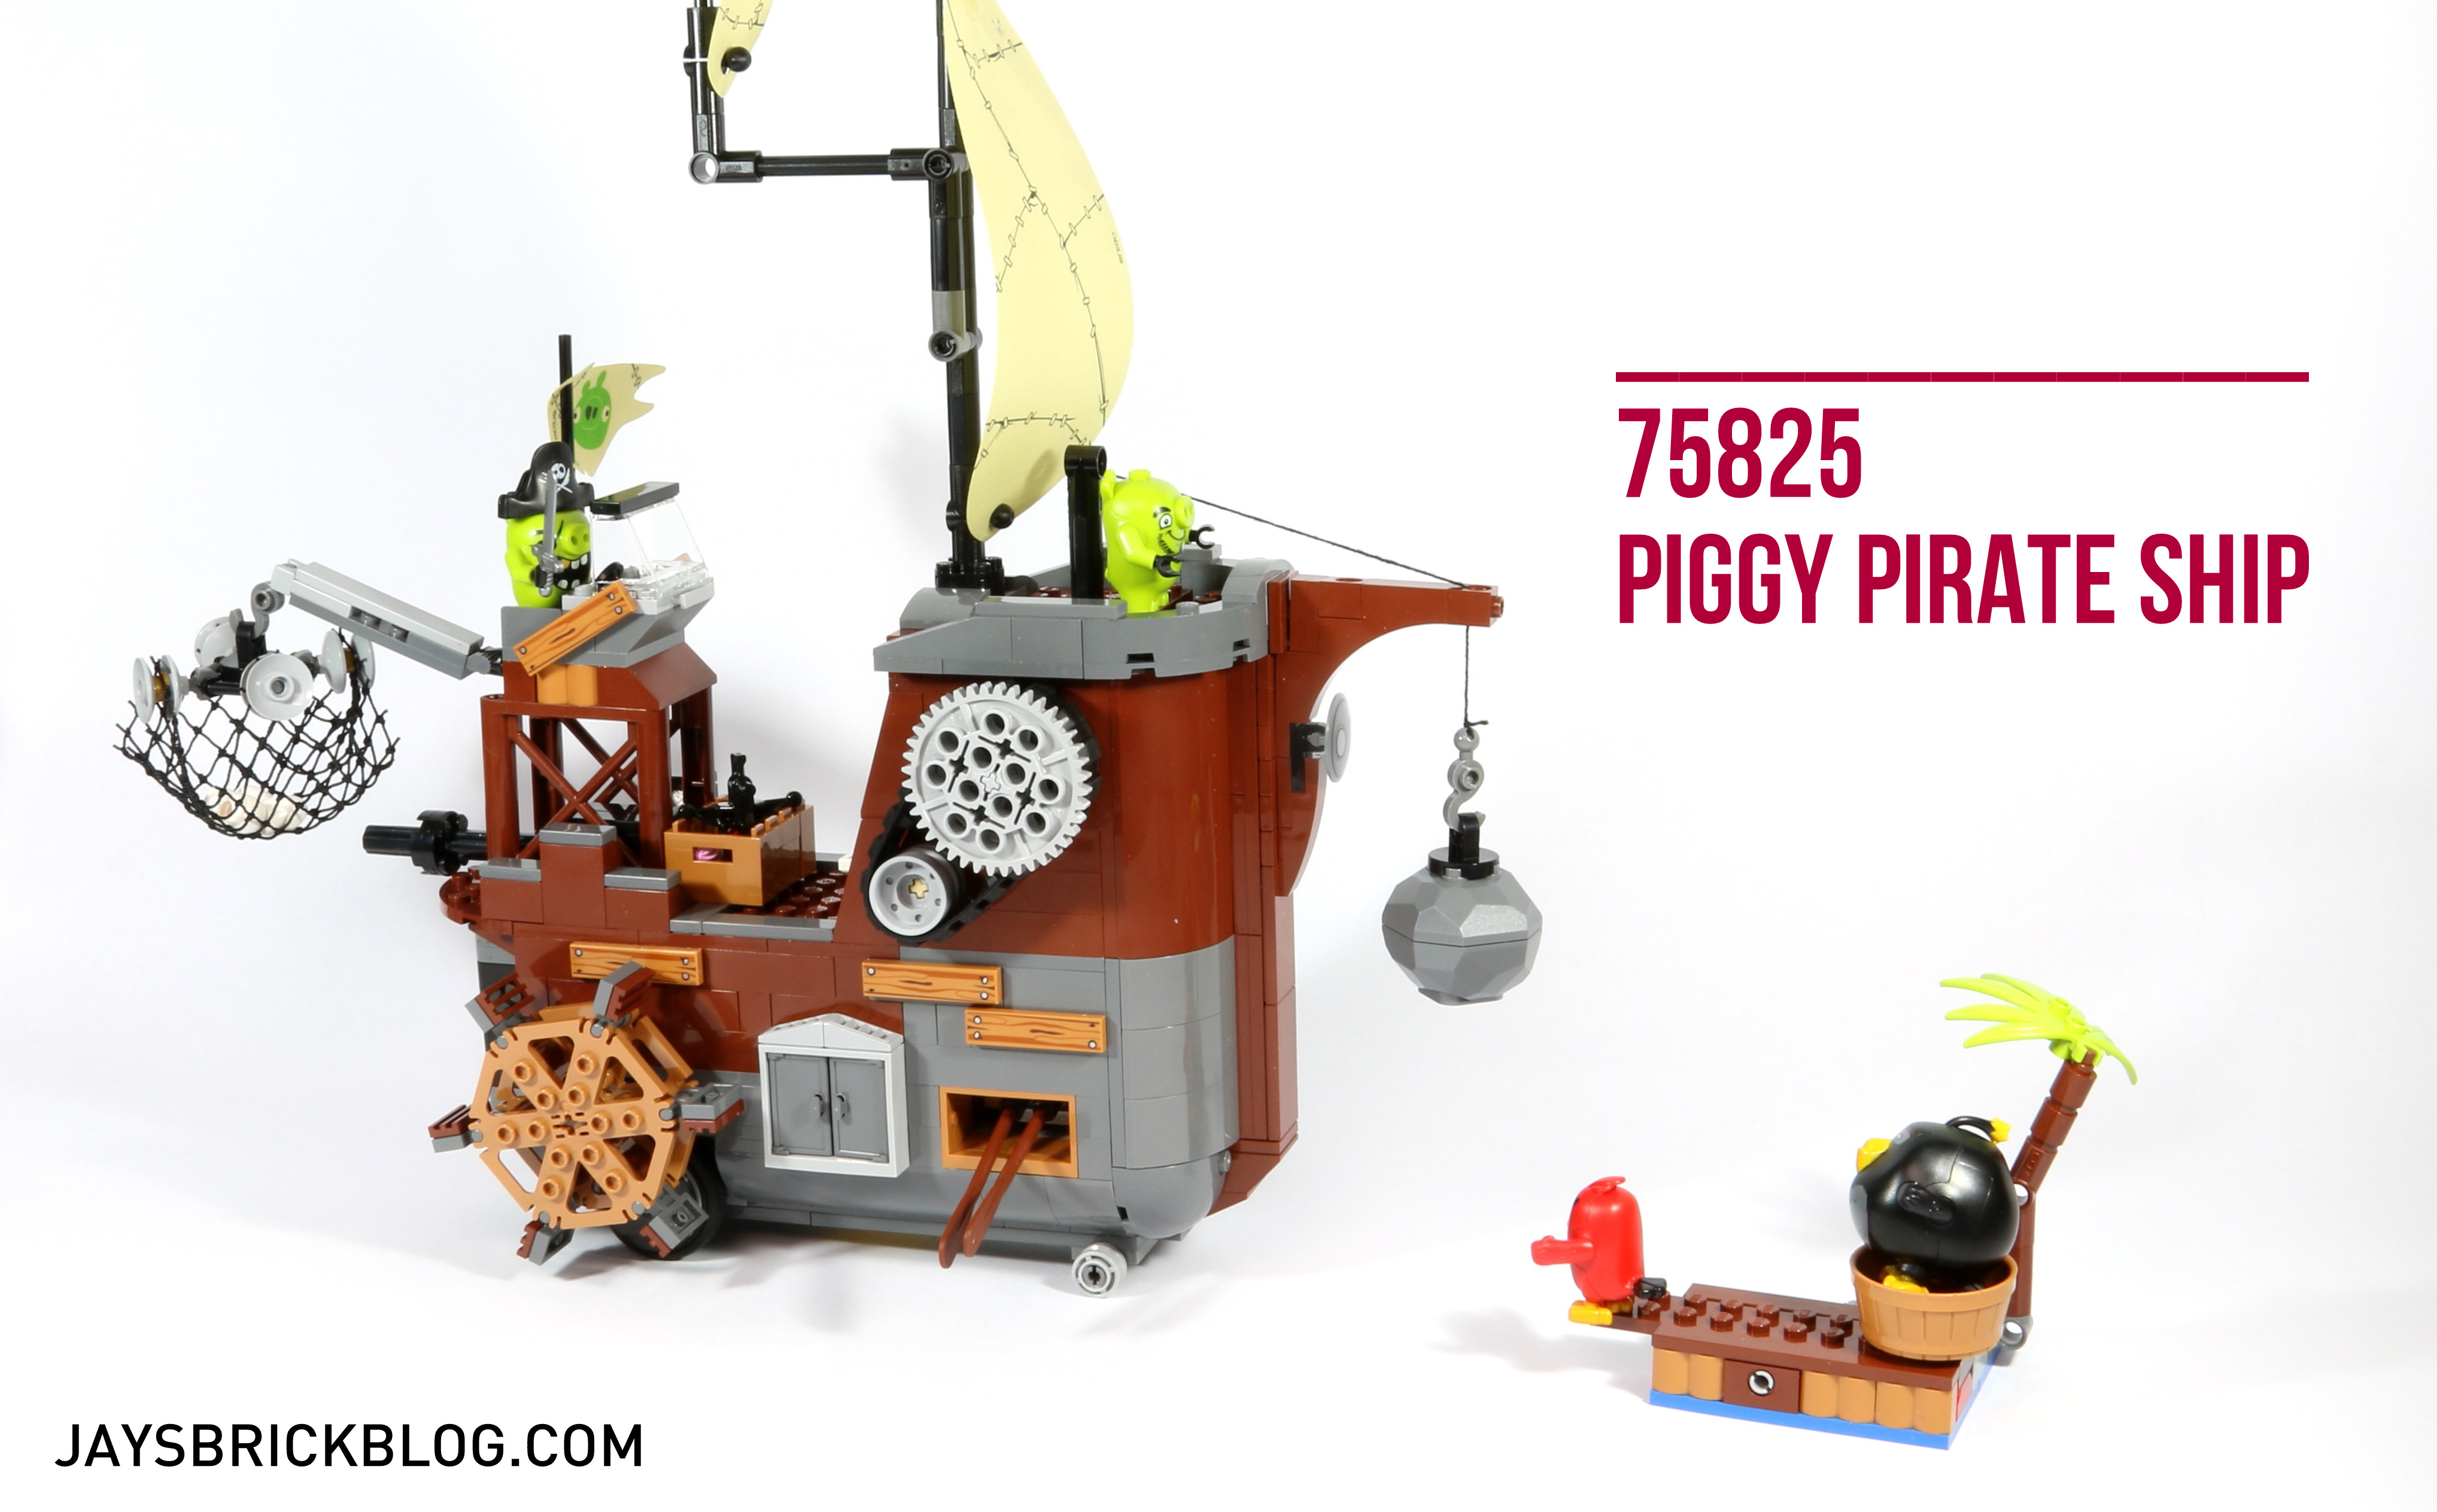 Piggy Buildable Construction Sets Review (Piggy Lego) 